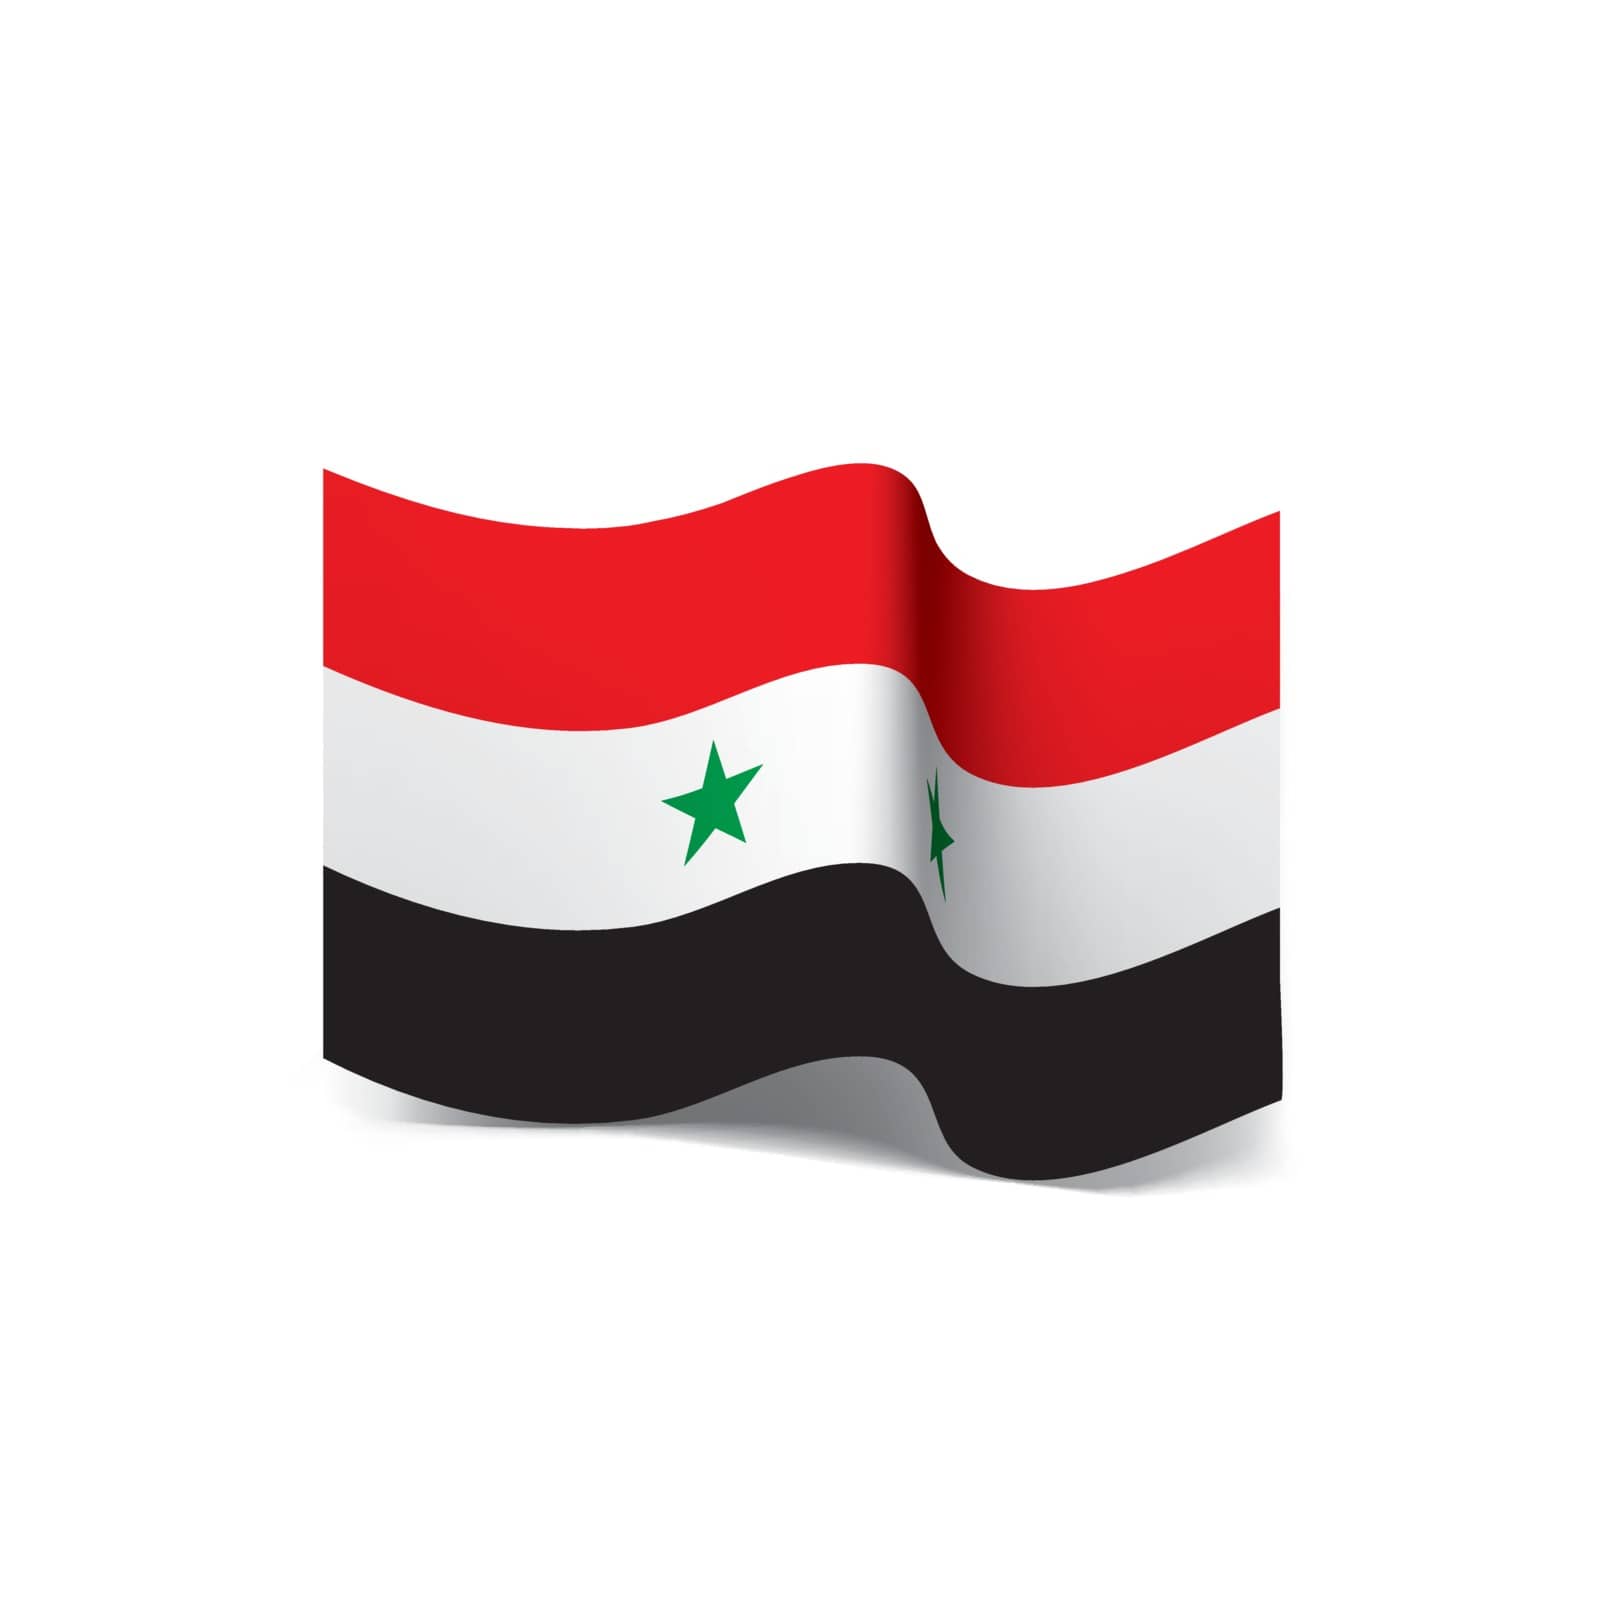 Syria flag, vector illustration on a white background